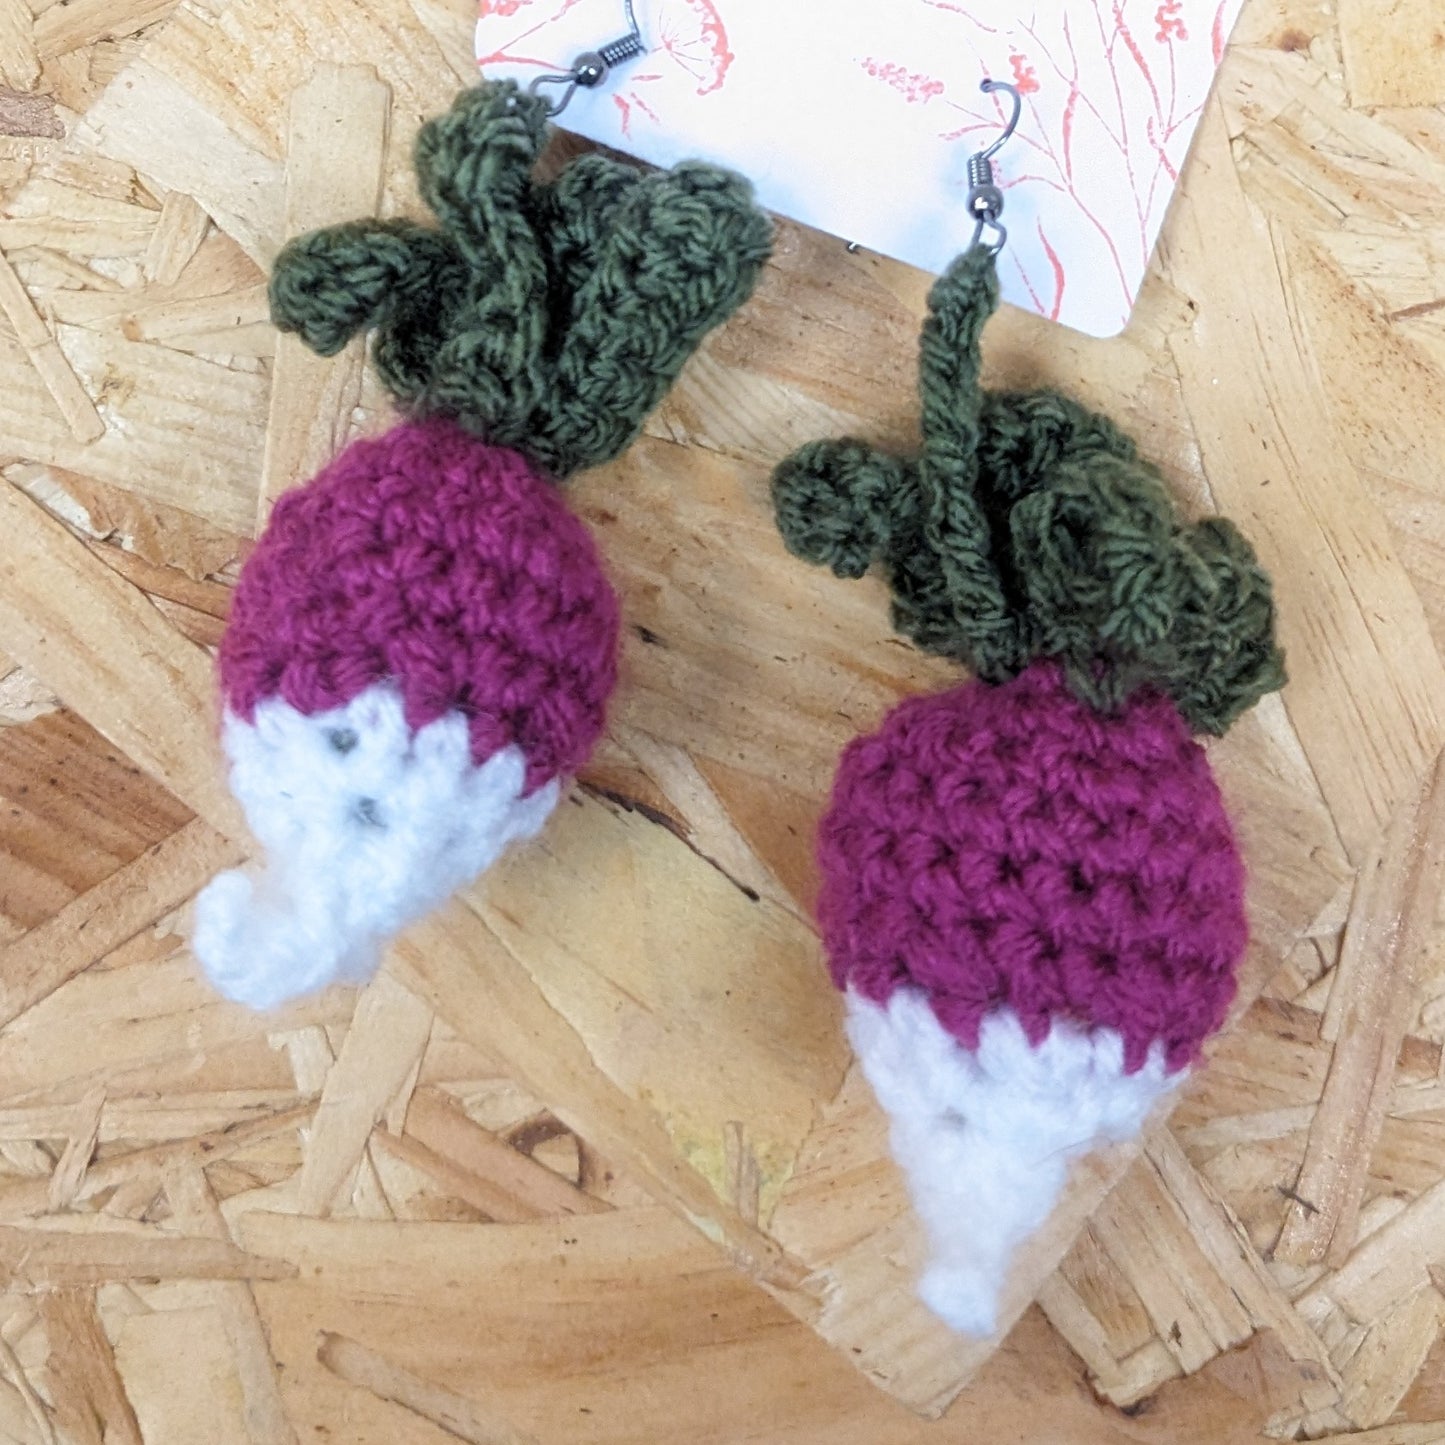 Crochet Radish earrings